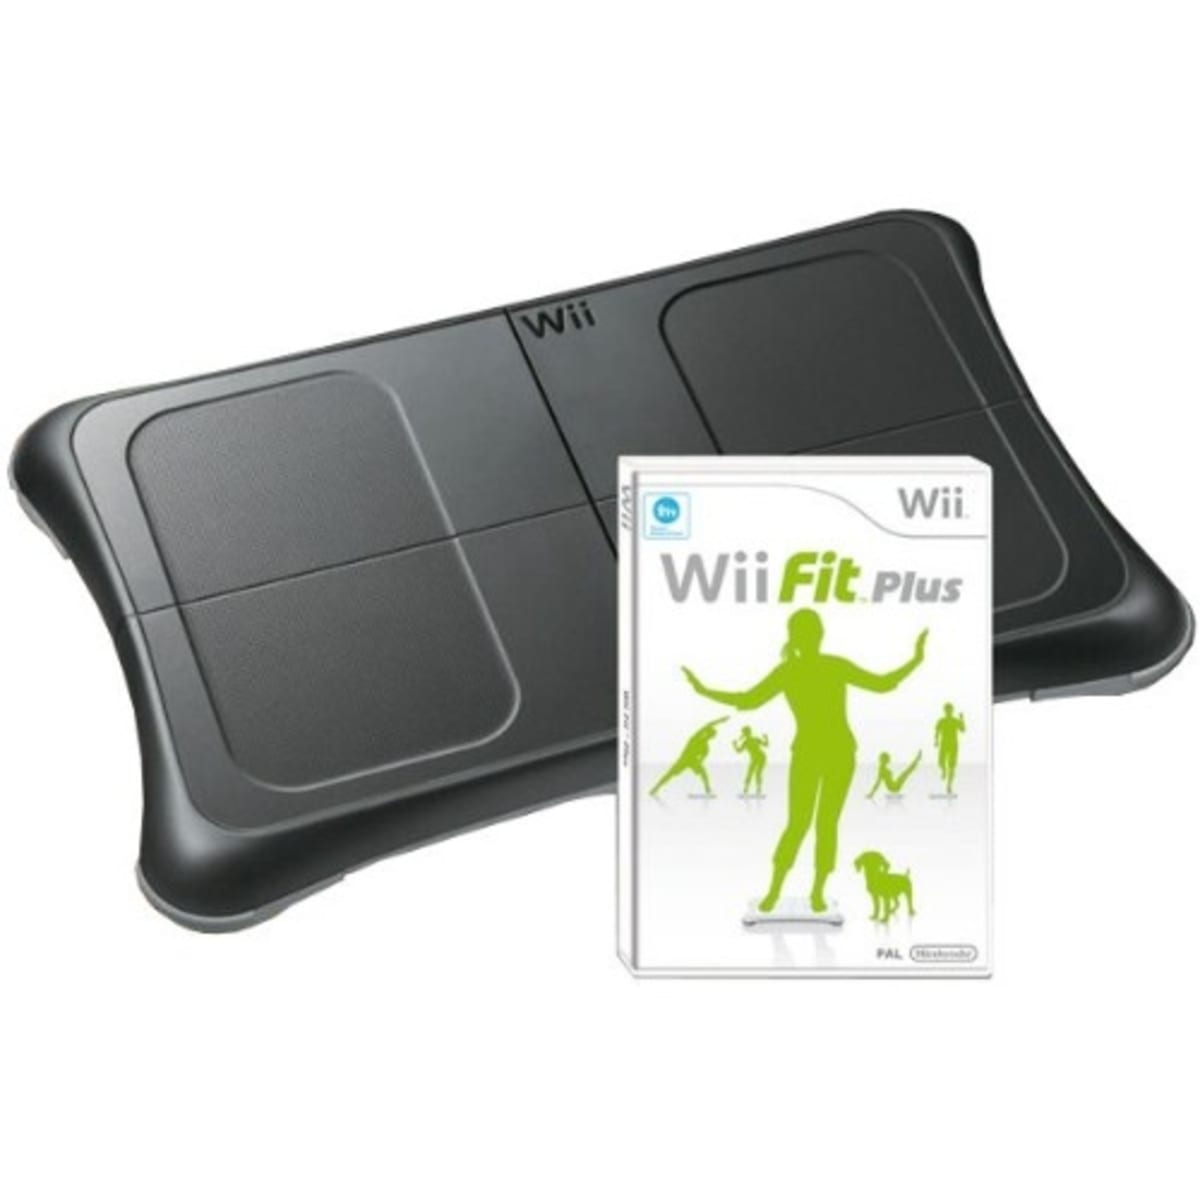 Wii fit. Wii Balance Board. Black Wii Balance Board. Фит плюс. Игра Wii Fit Plus для Nintendo Wii.